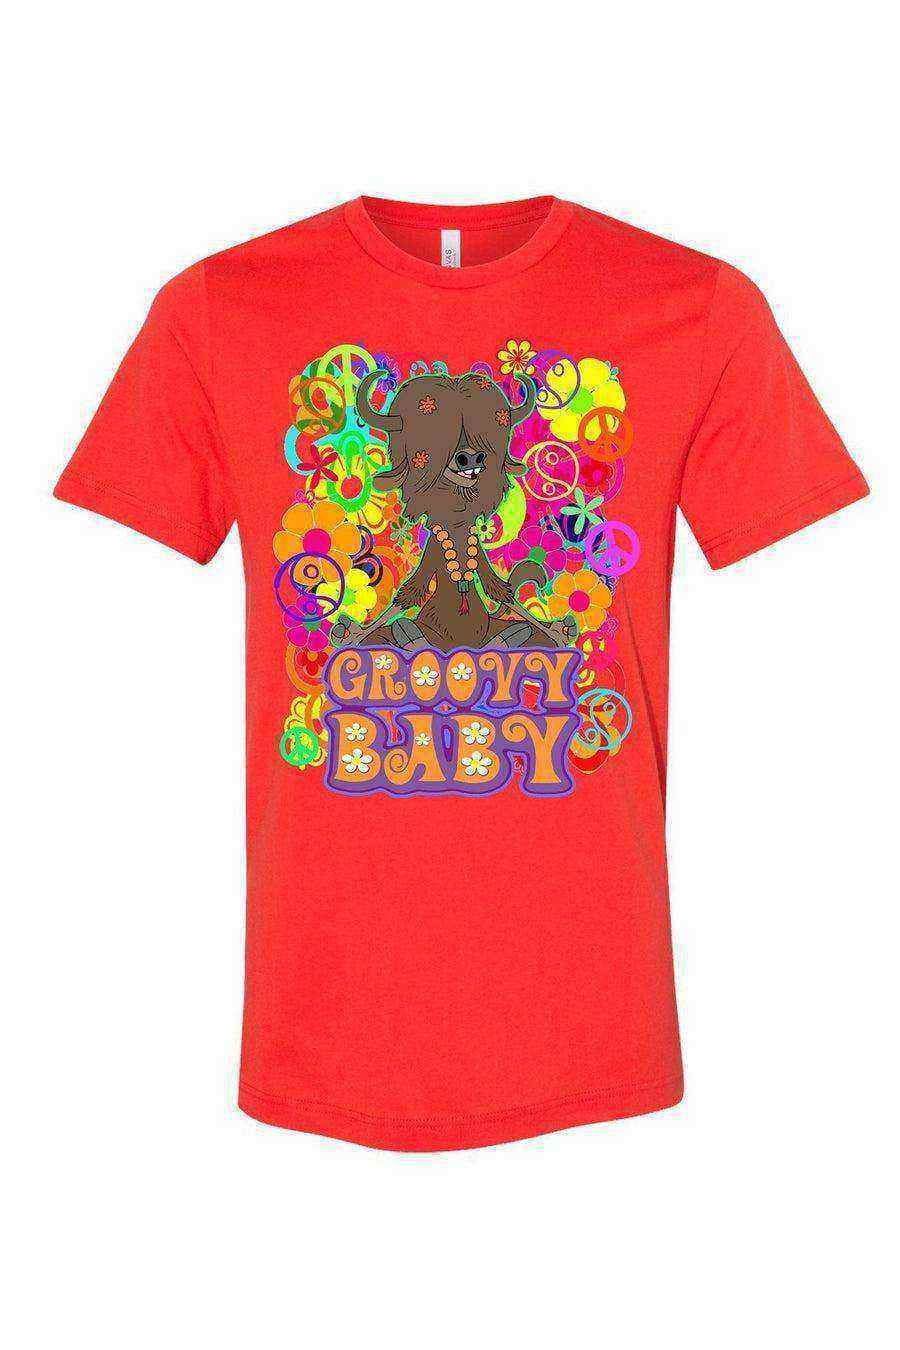 Groovy Yak Yax Shirt | Zootopia Shirt - Dylan's Tees